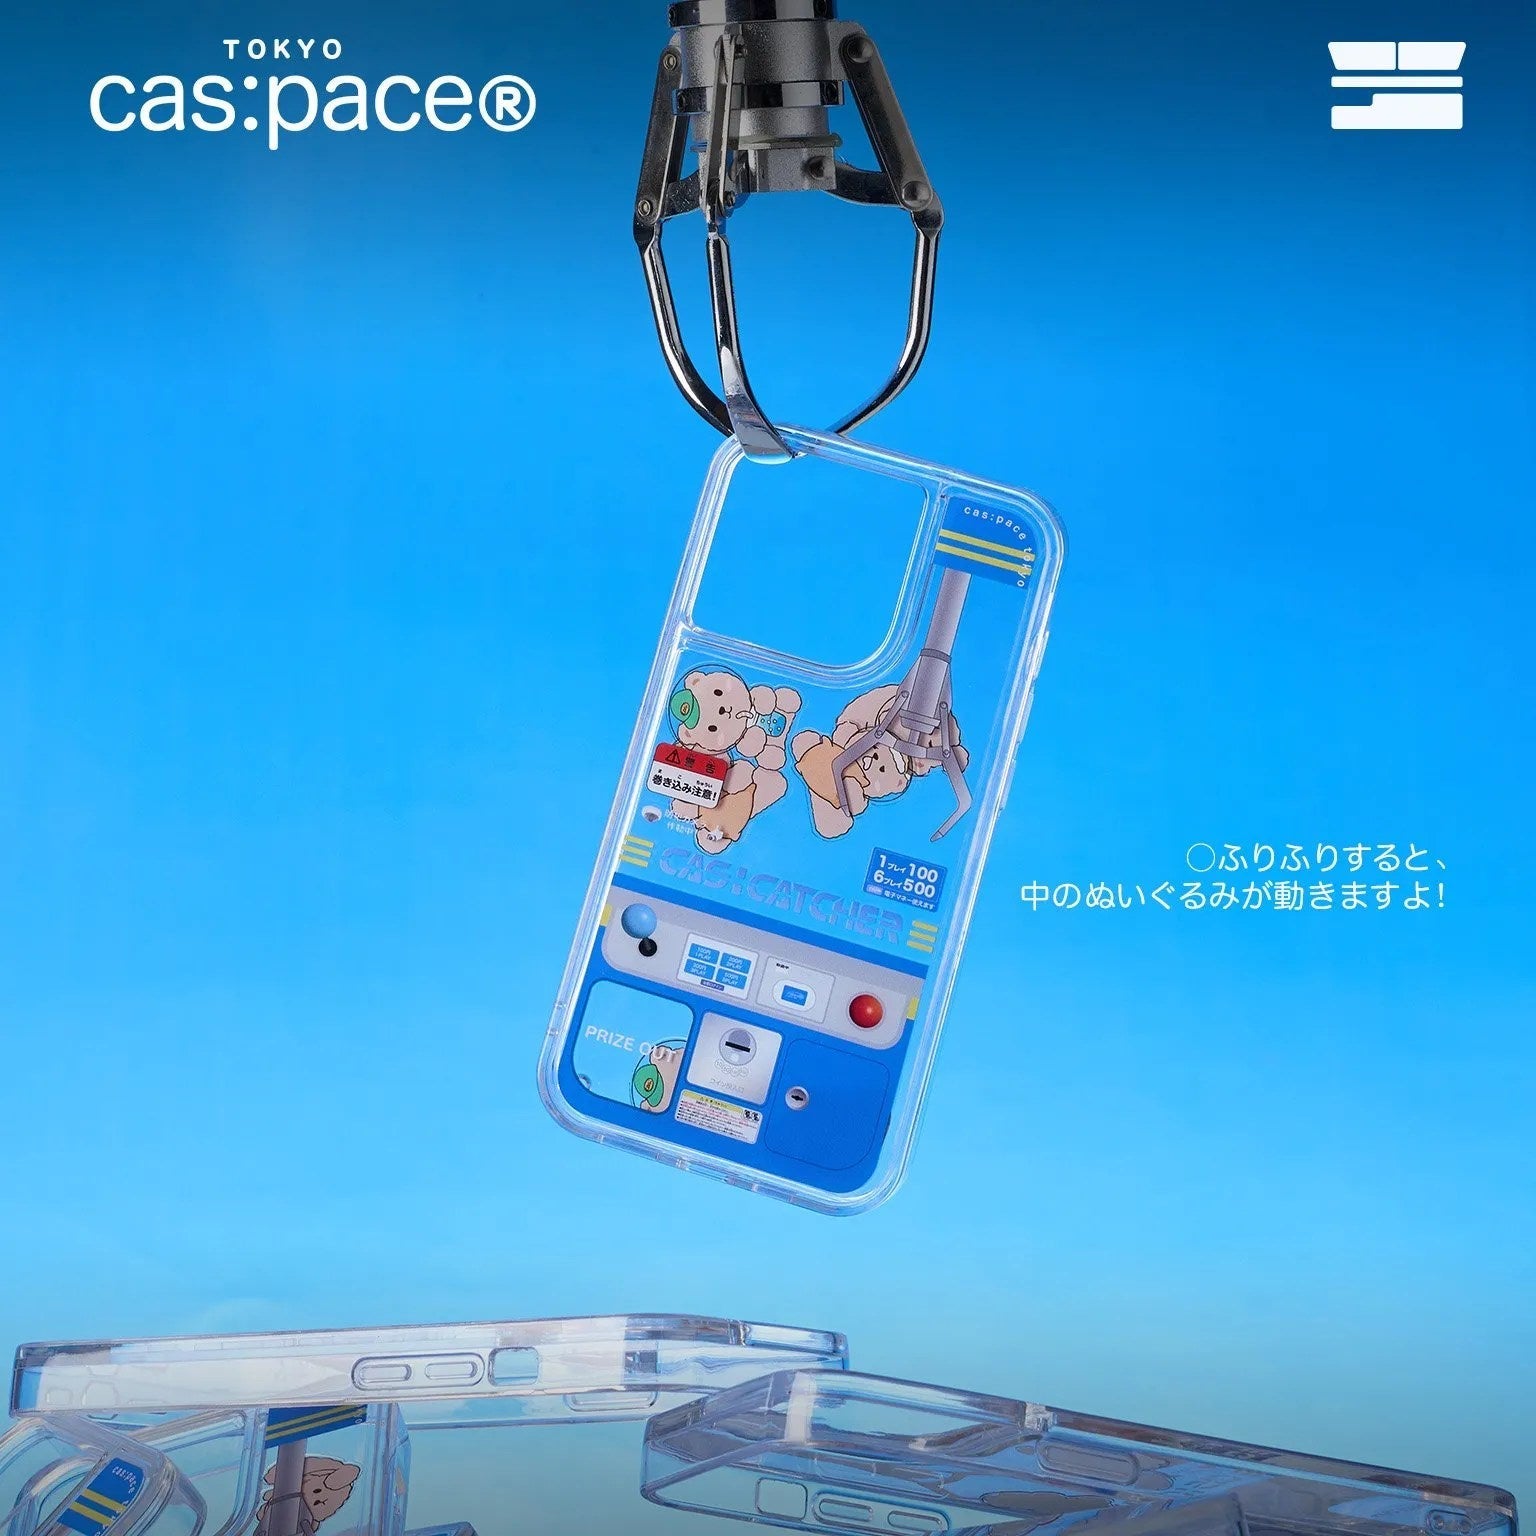 cas:pace 24S/S「CAS:CATCHER」携帯ケース - cas:pace 殼空間